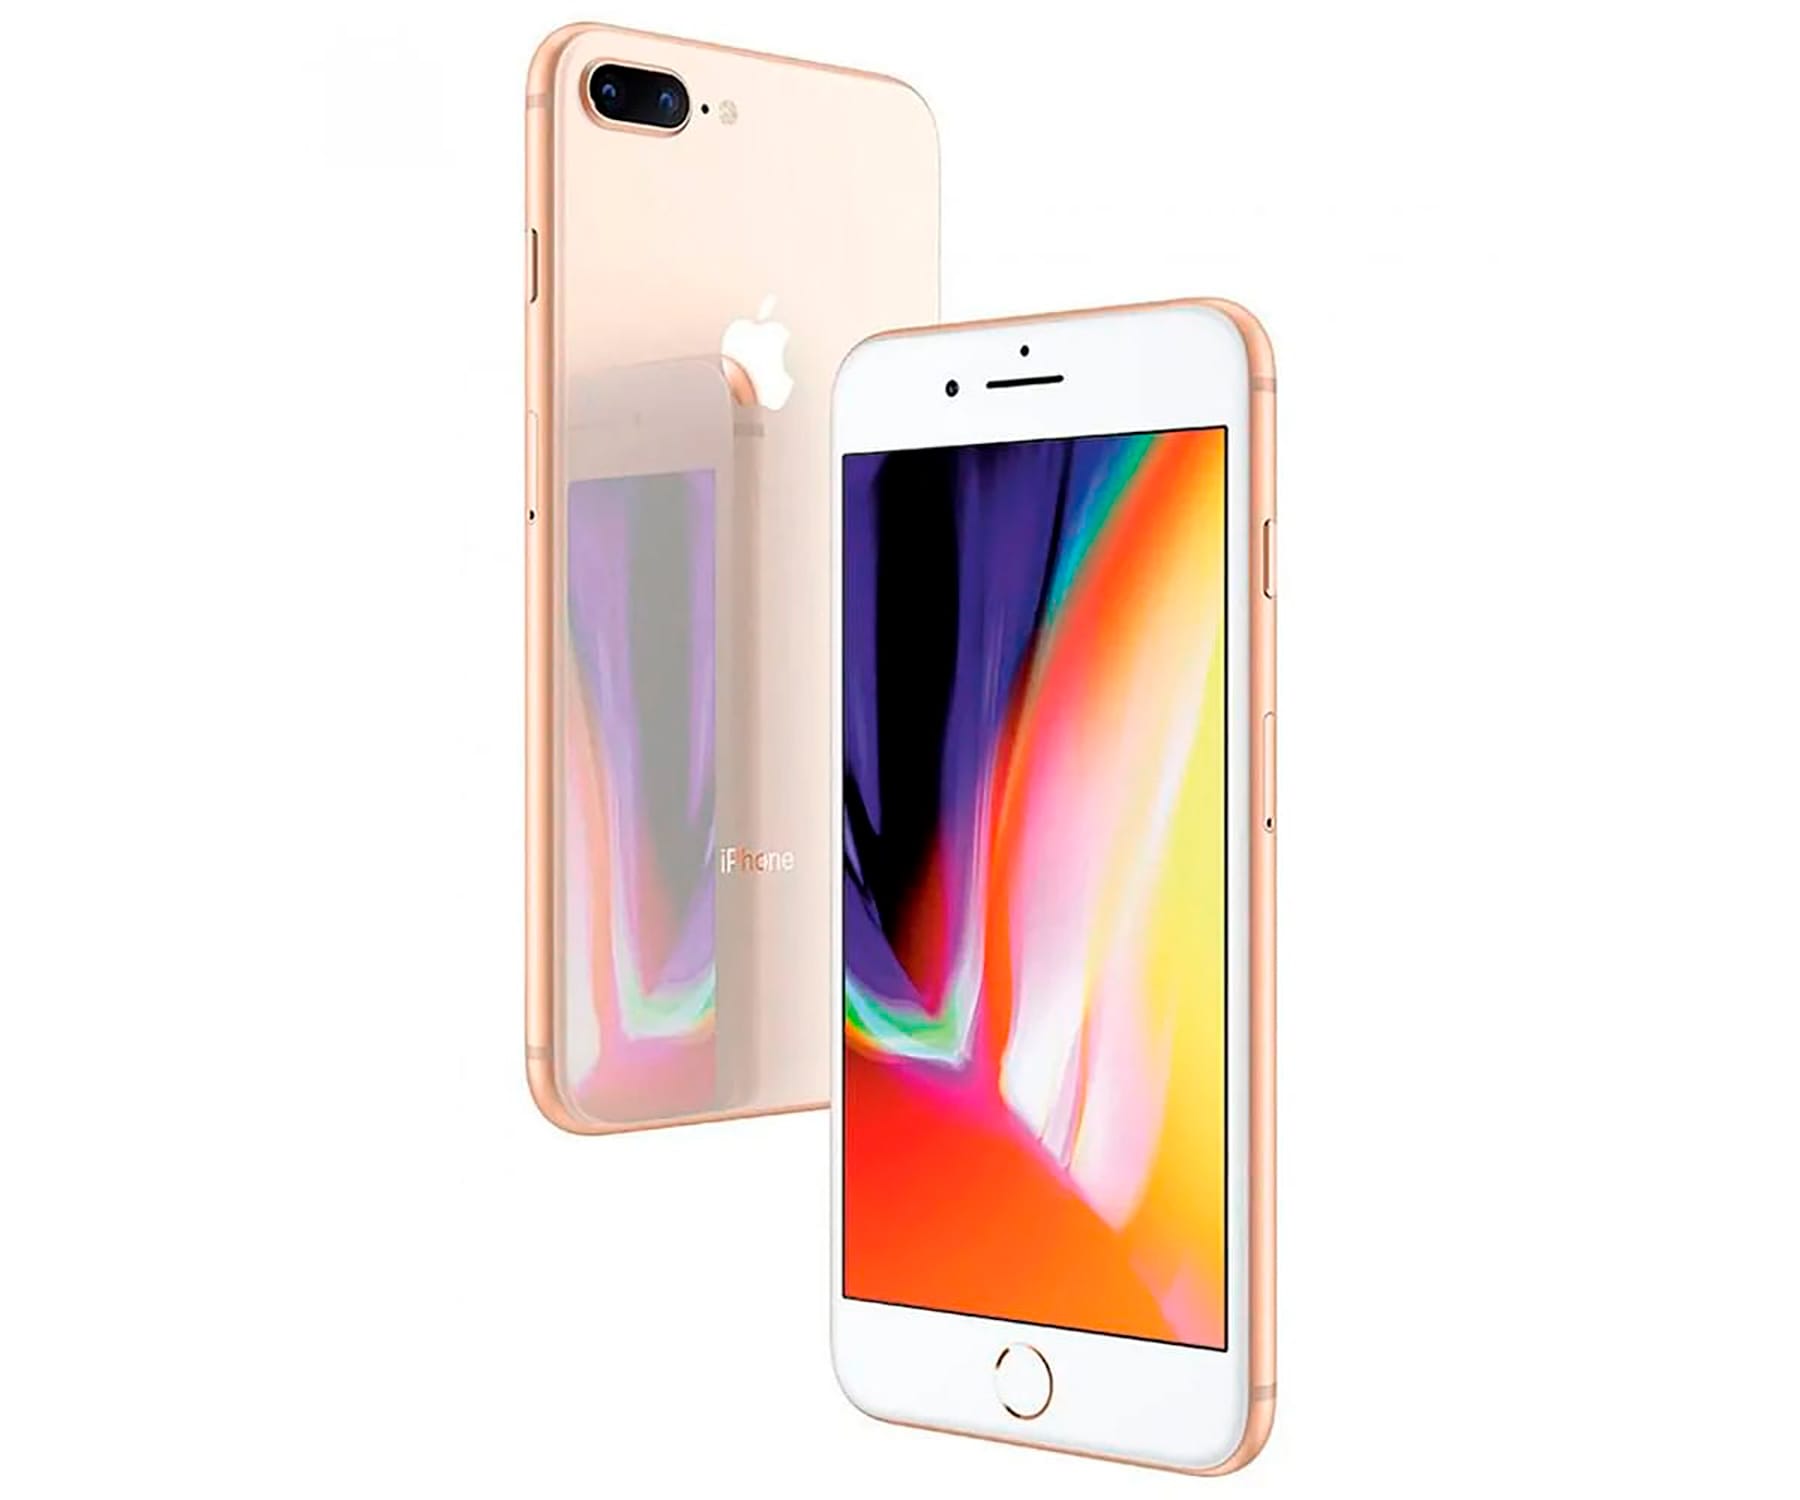 Apple iPhone 8 Plus Reacondicionado (CPO) Dorado (Gold) 3+64GB / 5.5